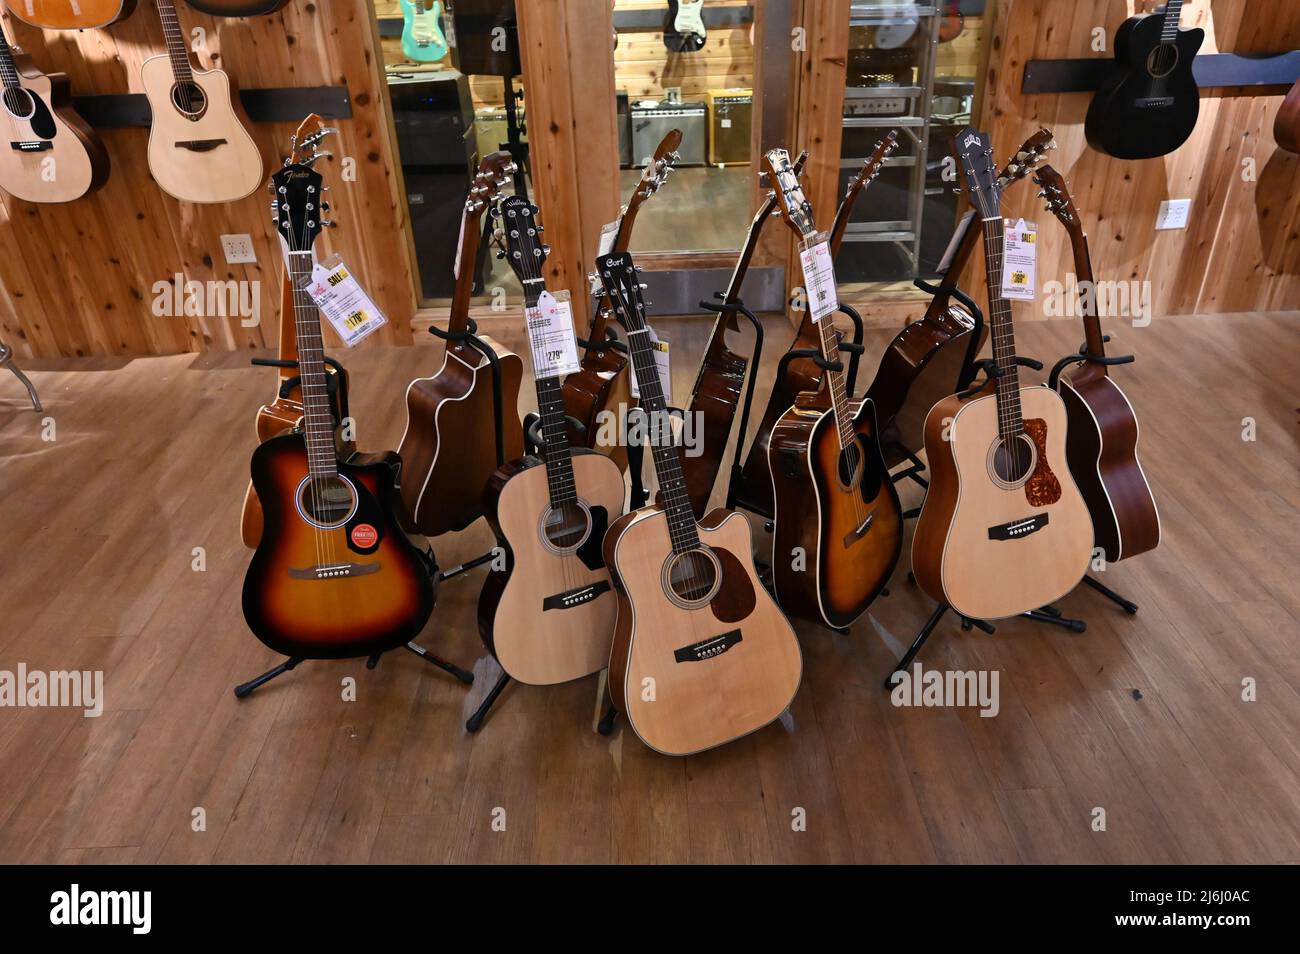 A guitar shop in Las Vegas Stock Photo - Alamy